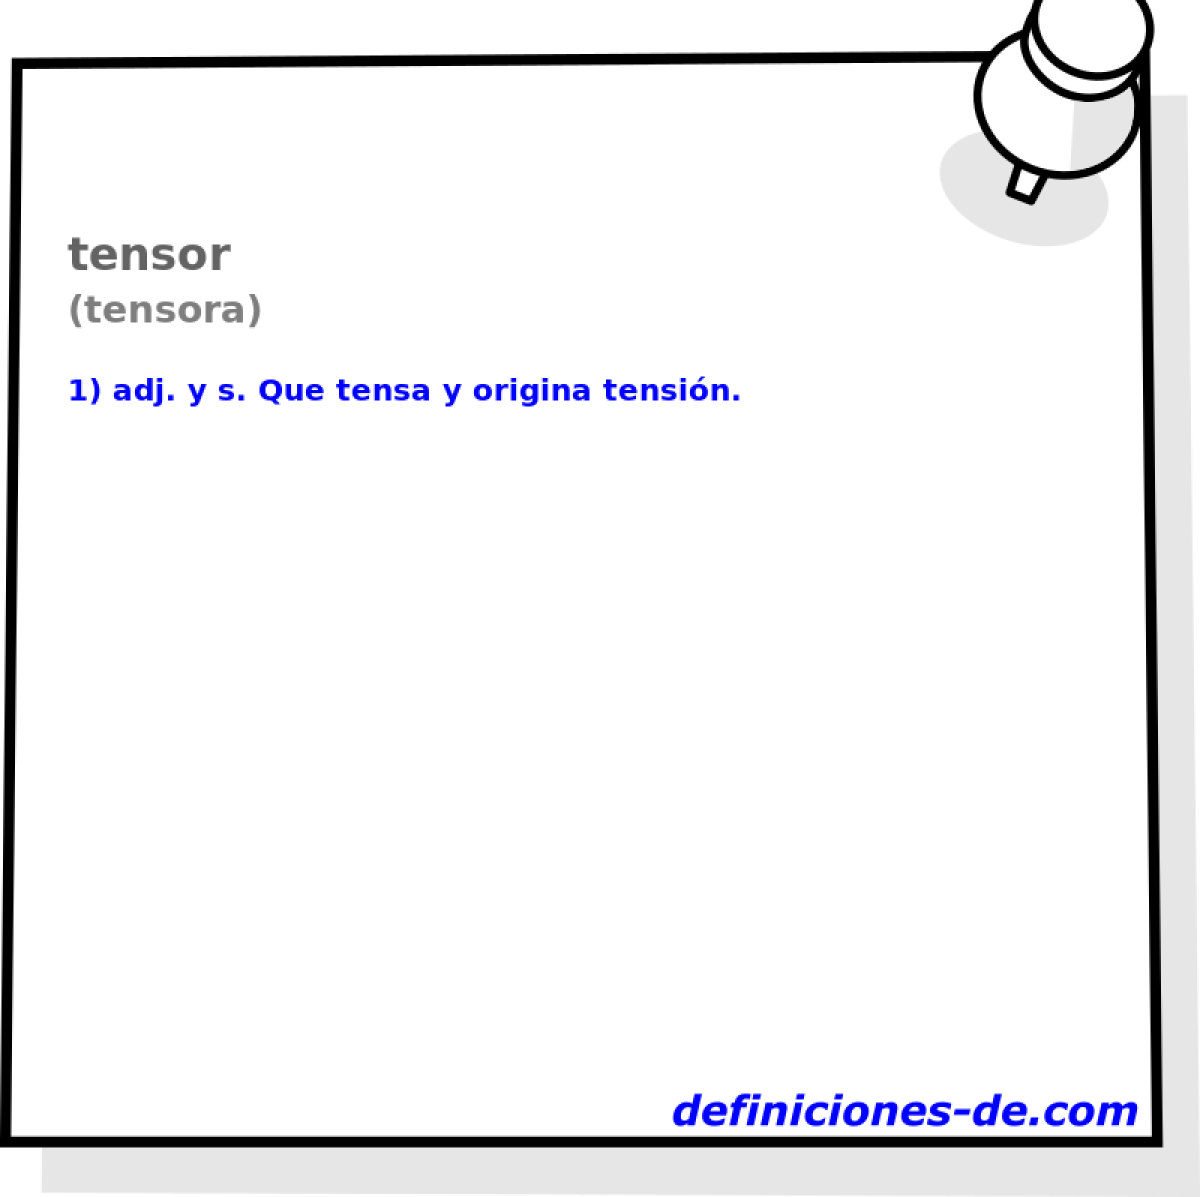 tensor (tensora)